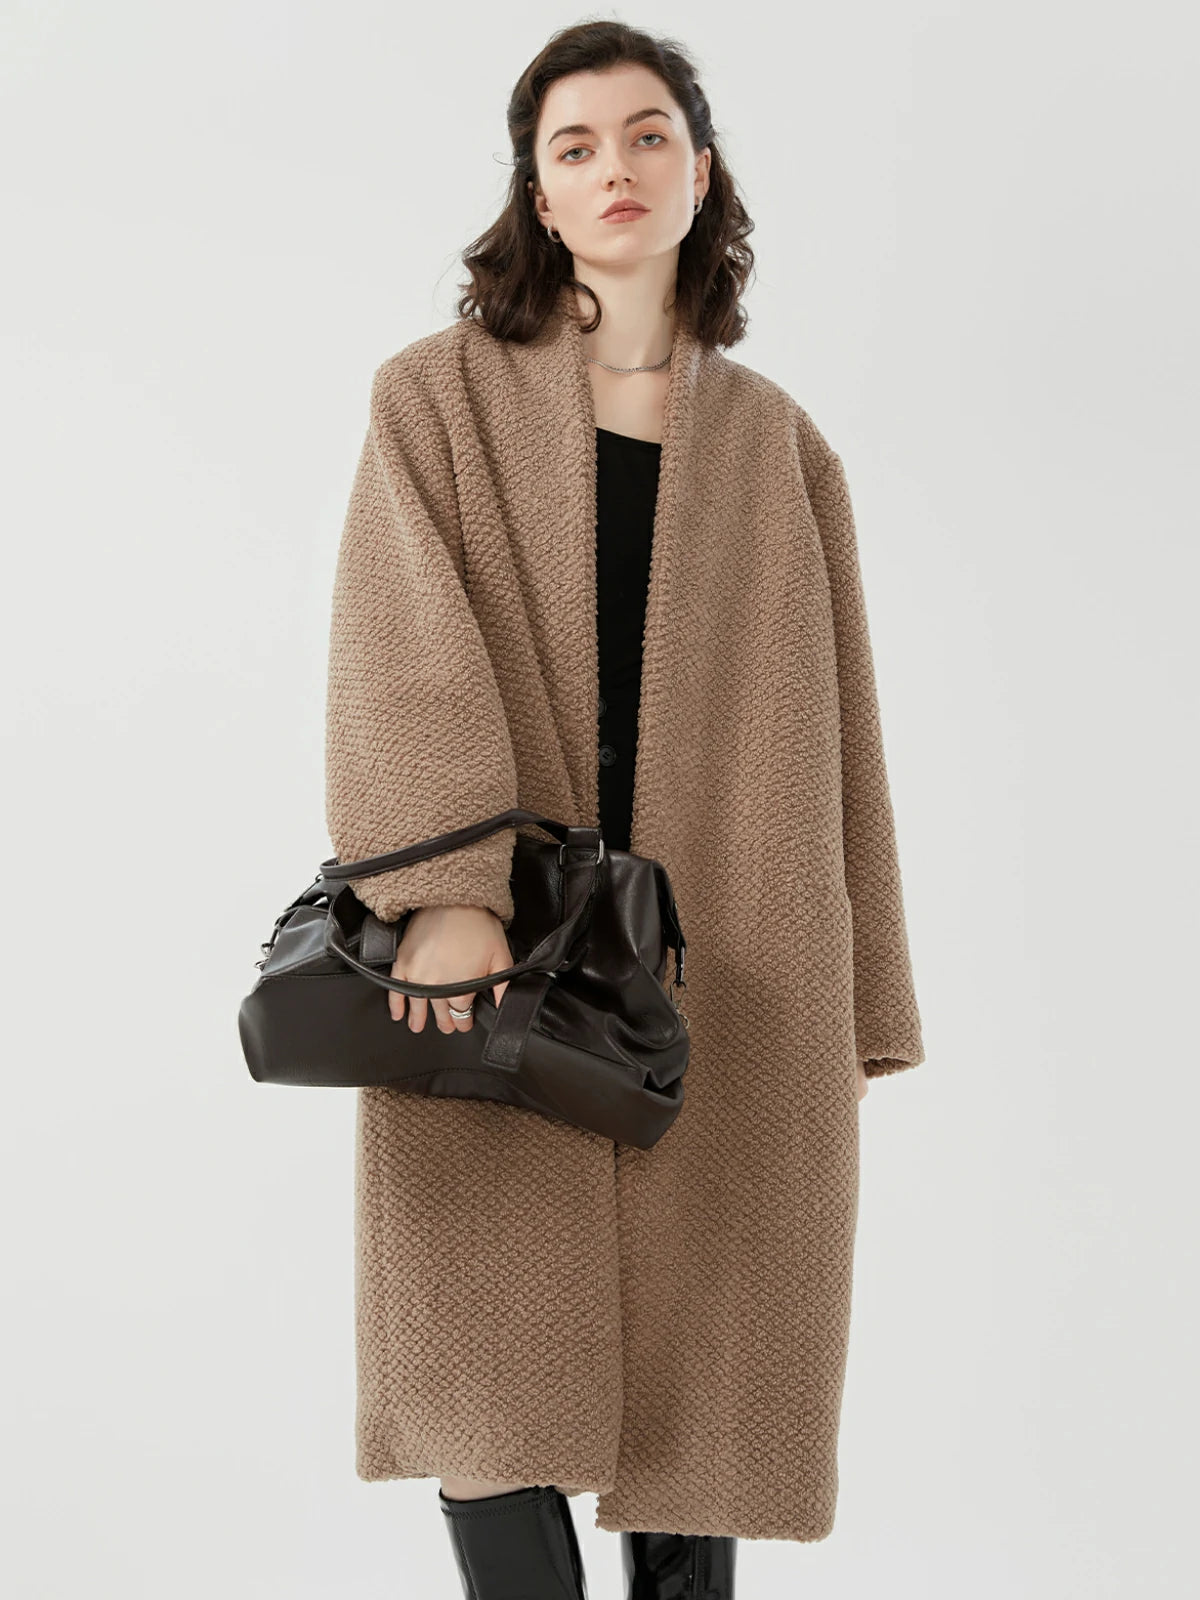 Exquisite appearance of brown Sherpa Fleece open-front coat, offering versatile styling.